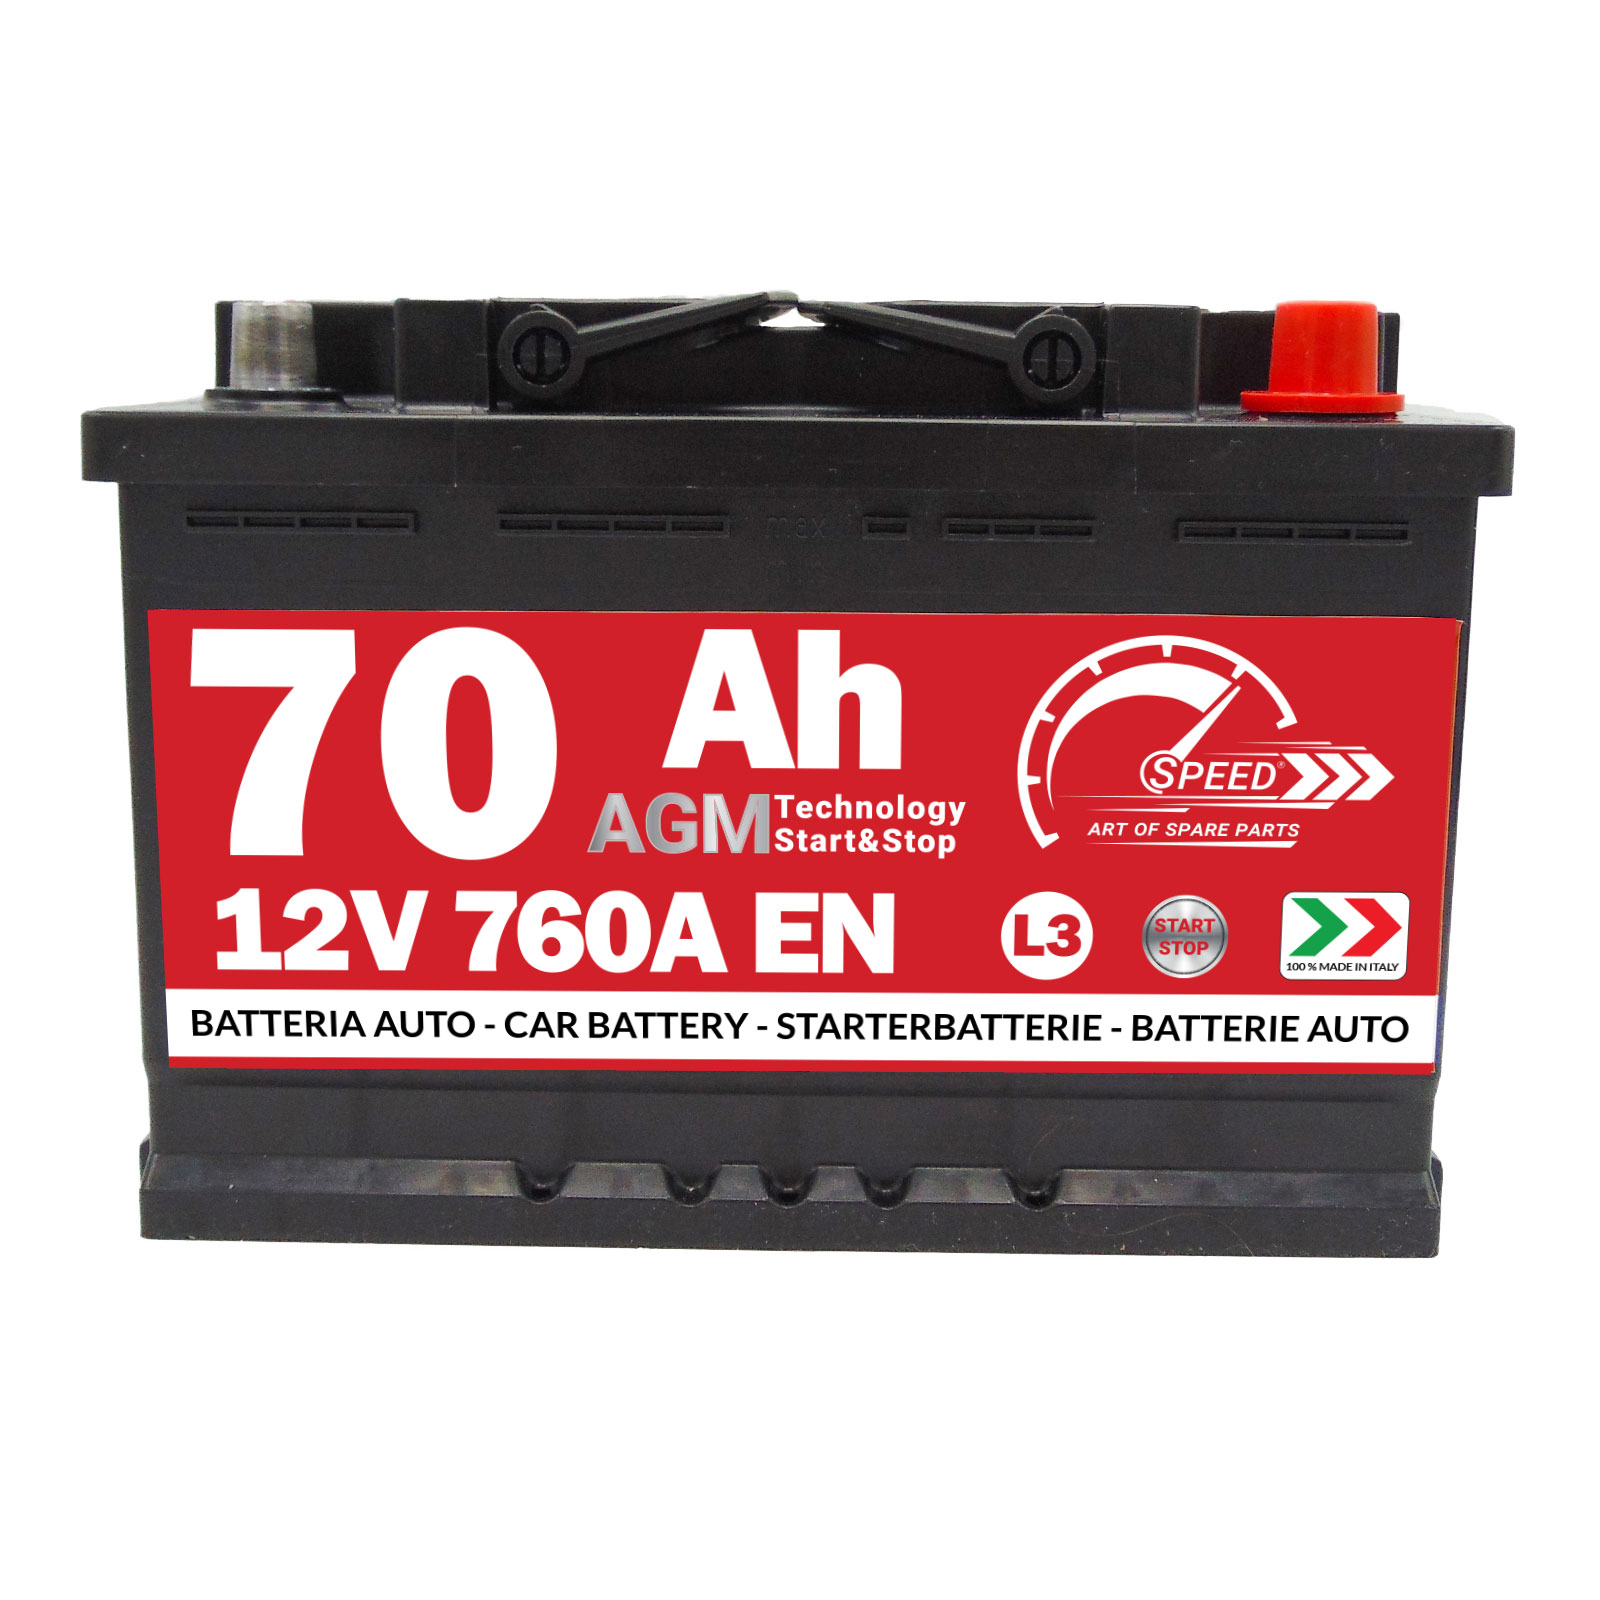 Batteria AGM Speed 70Ah 760A Start&stop - Ricambi auto SMC